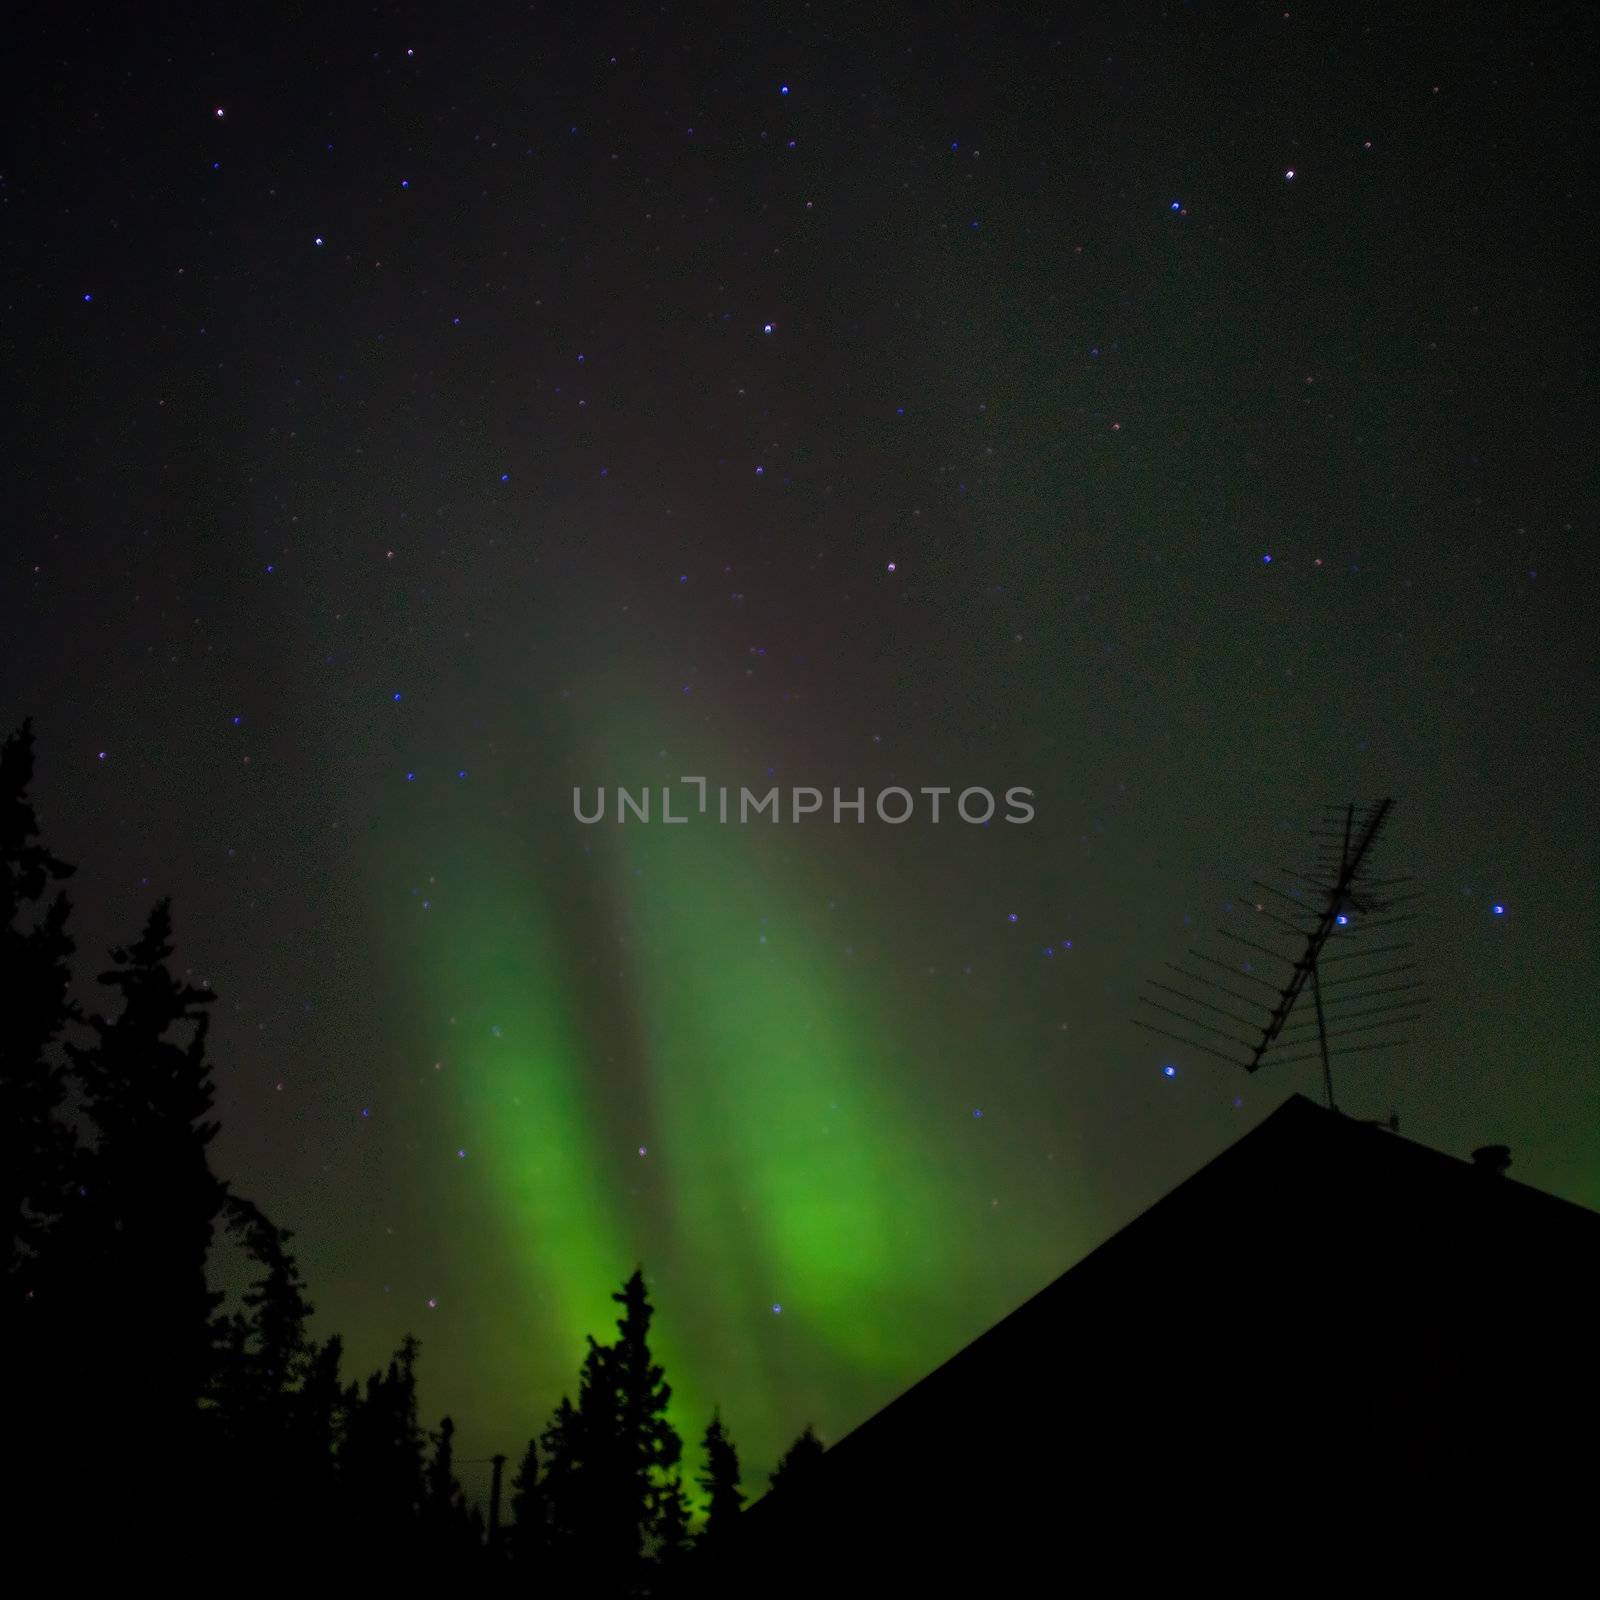 Northern lights (Aurora borealis) substorm by PiLens